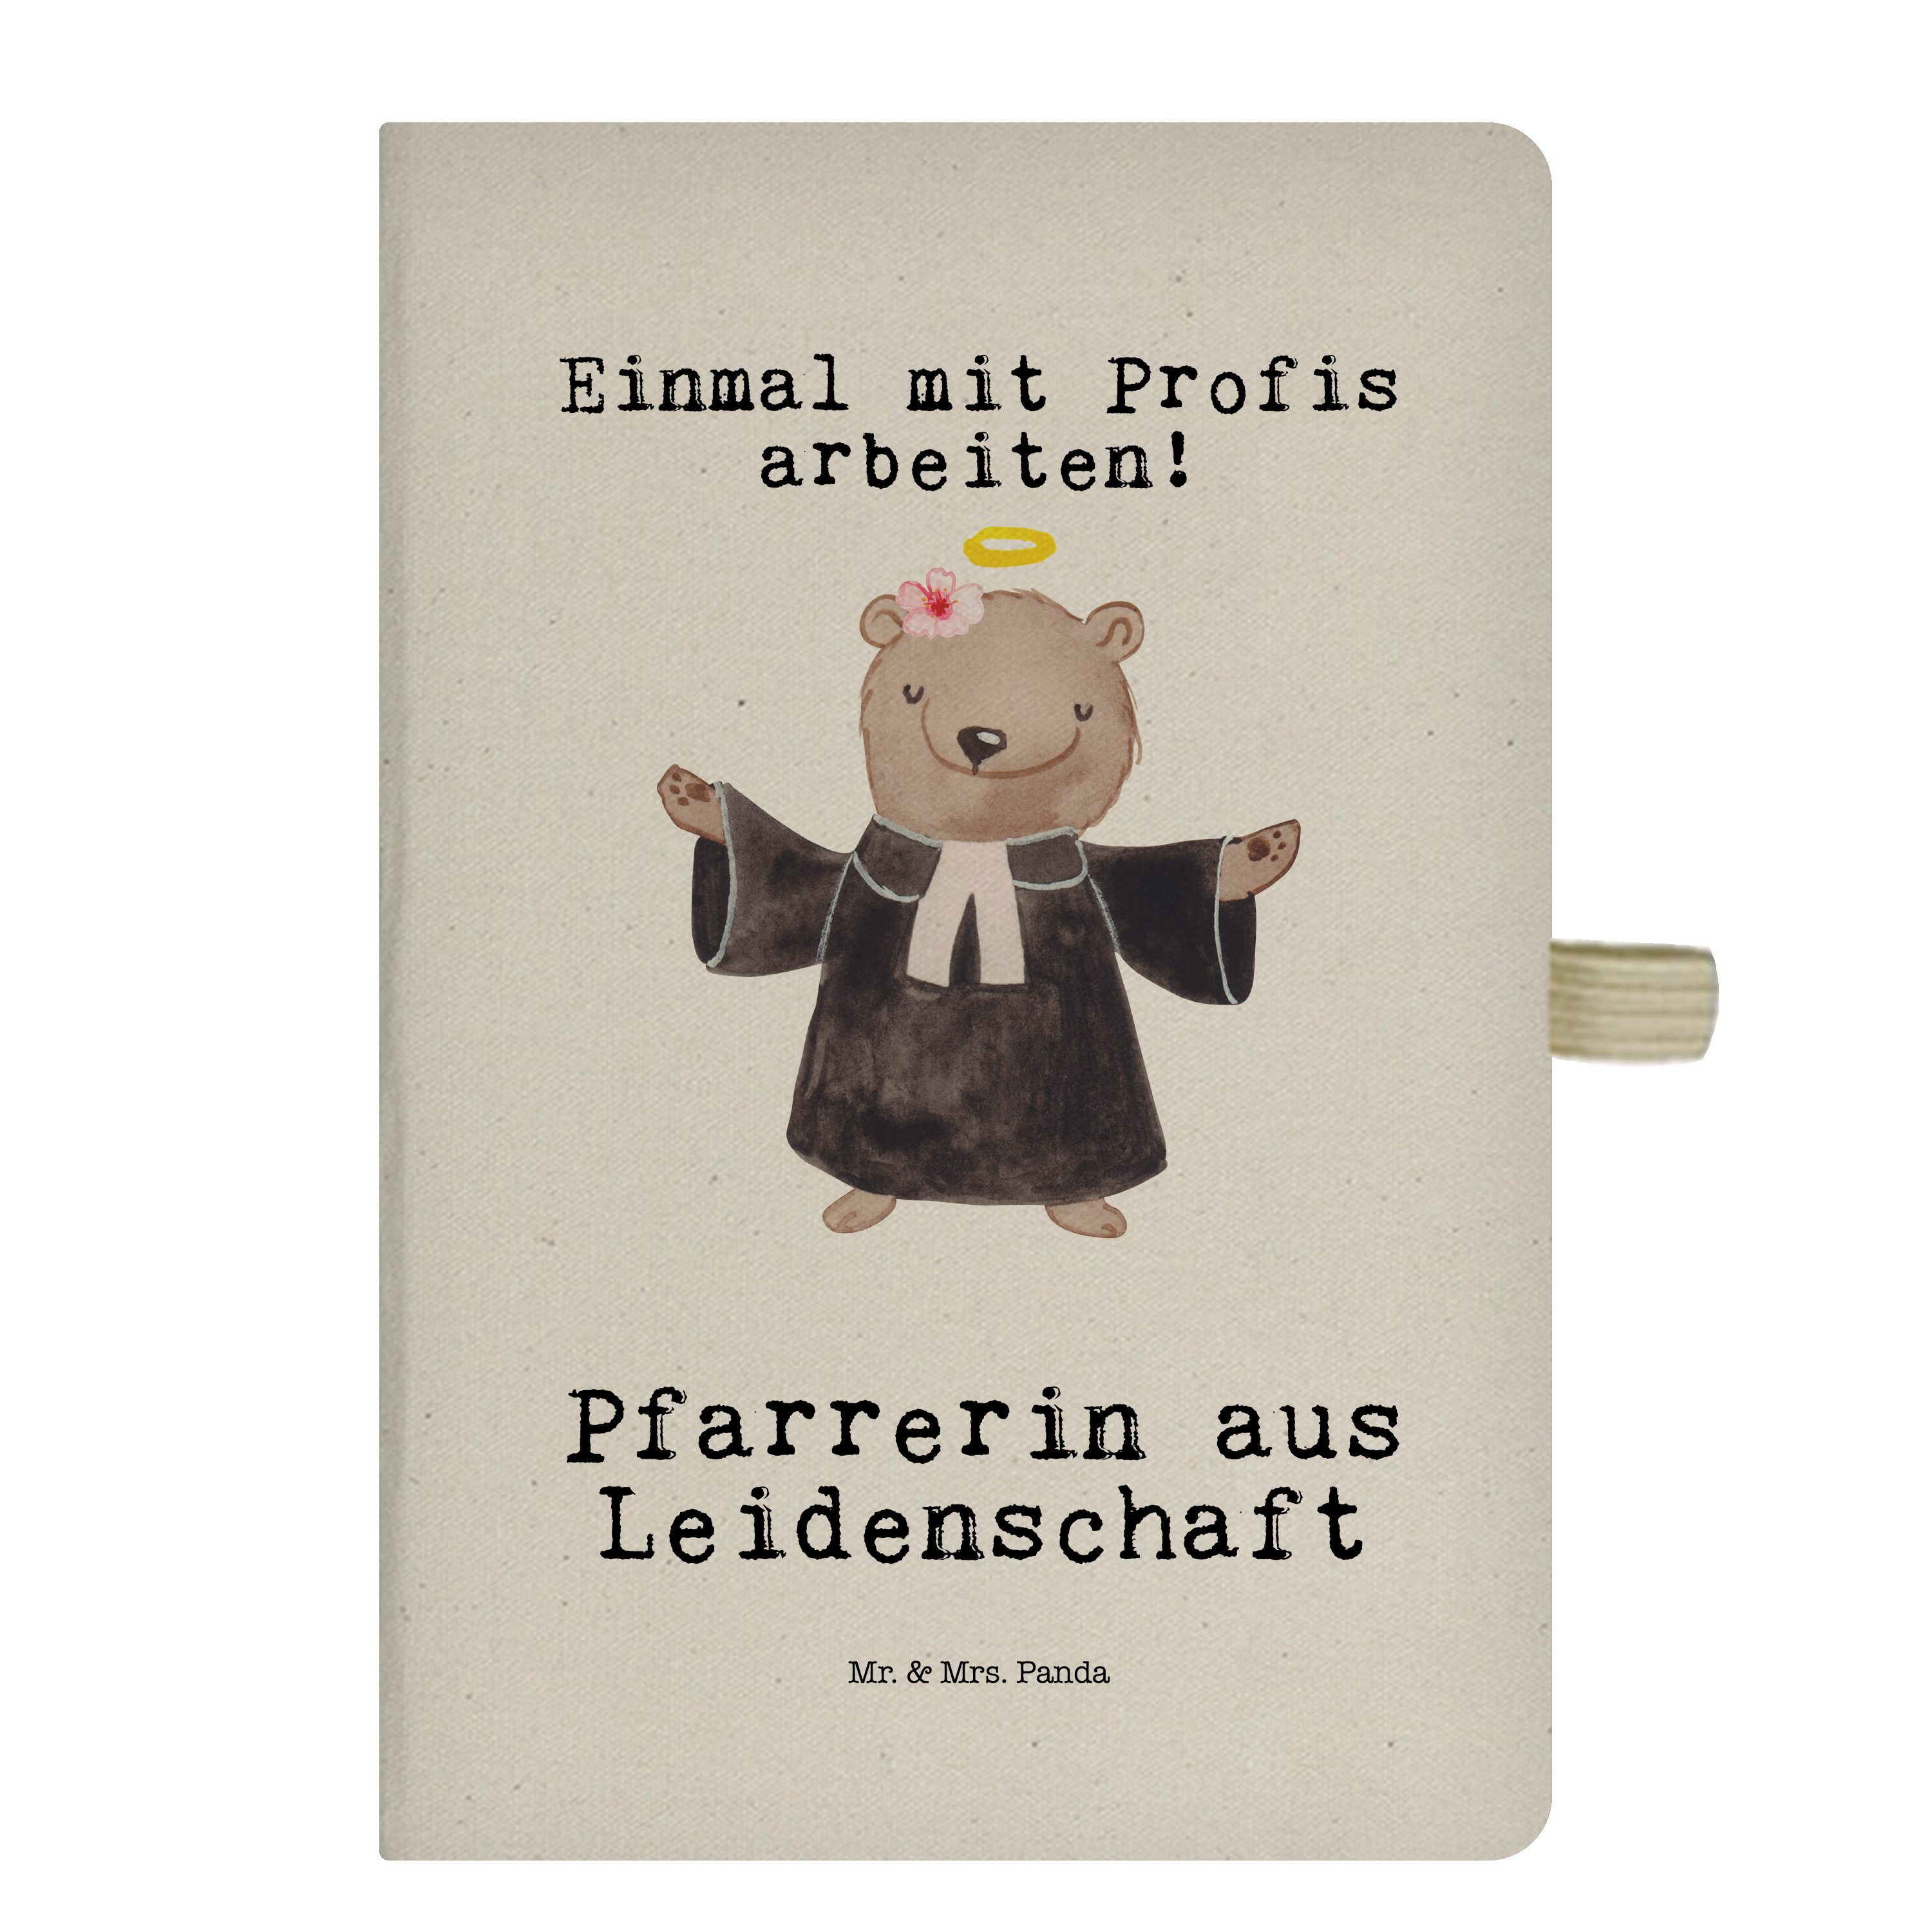 Mr. & Mrs. Panda Notizbuch Pfarrerin aus Leidenschaft - Transparent - Geschenk, Predigerin Pries Mr. & Mrs. Panda